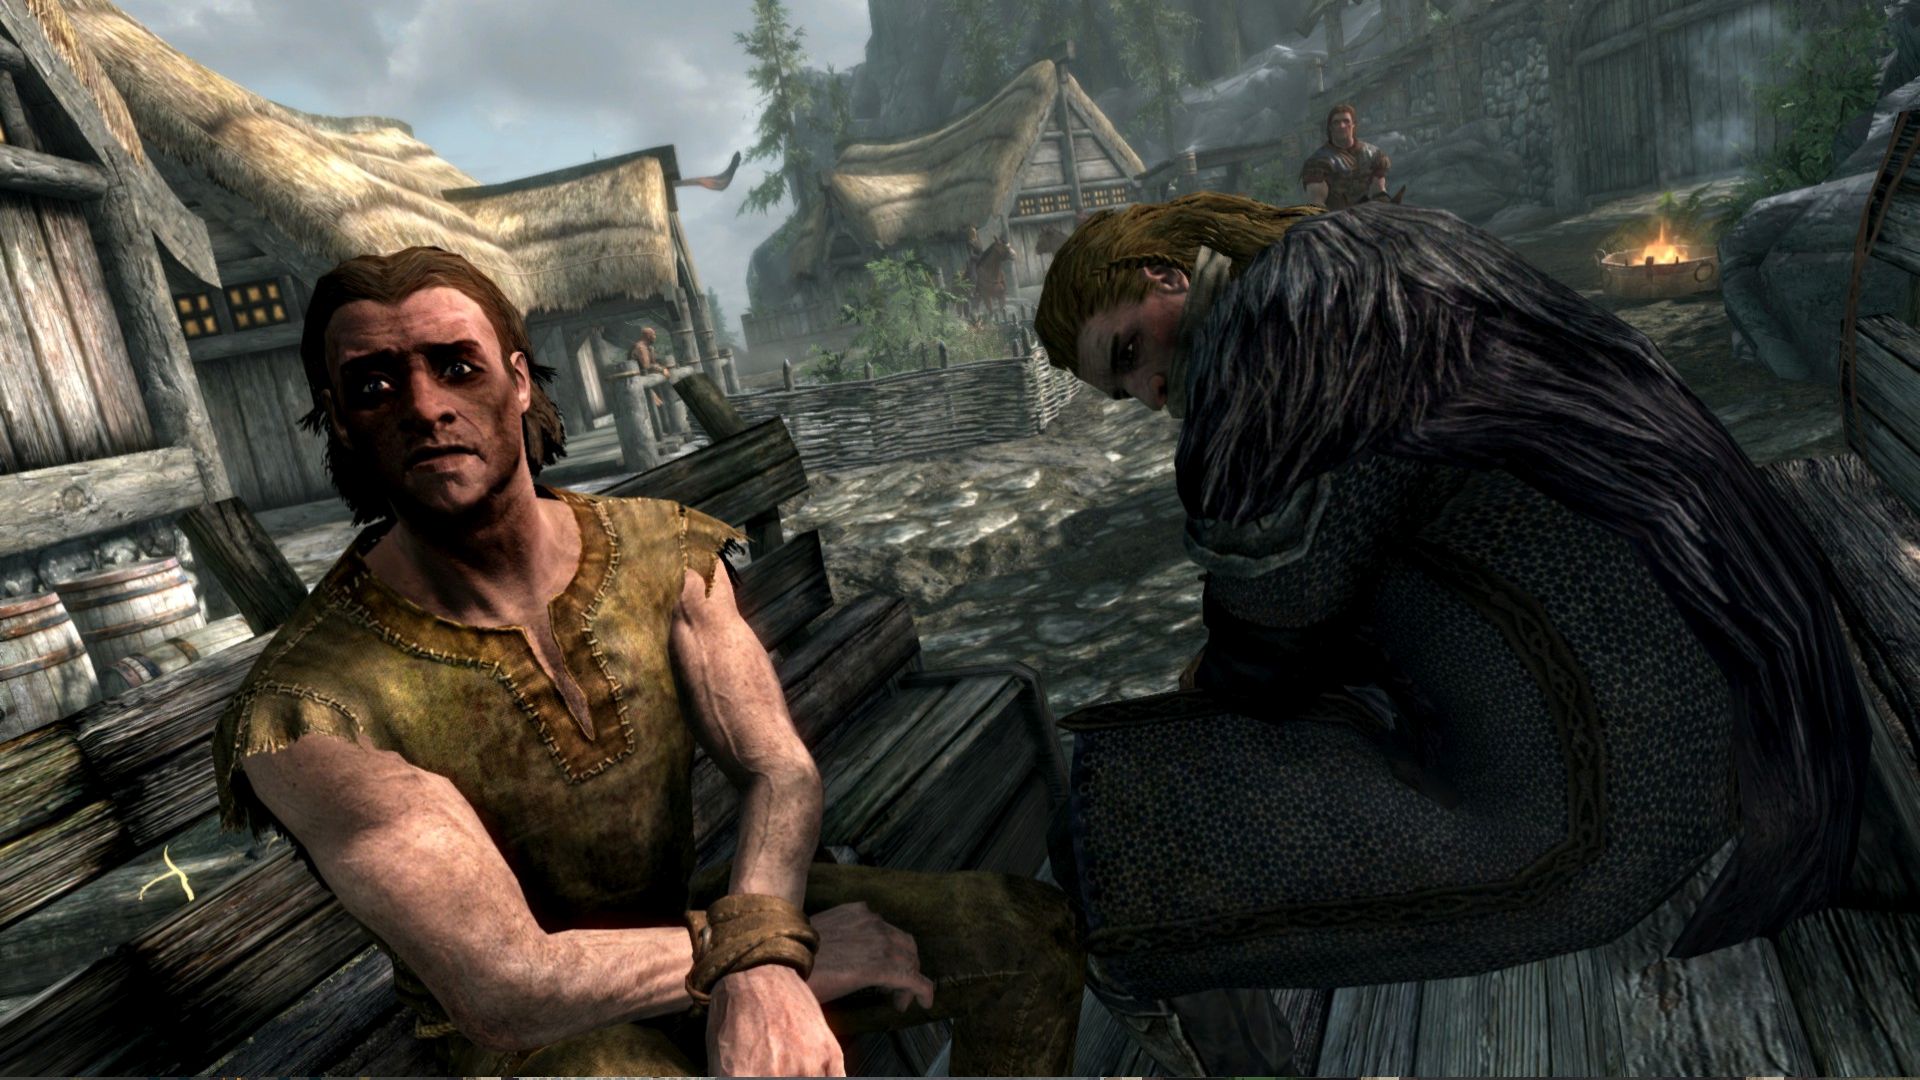 Two men in rags sit in a wooden cart in The Elder Scrolls V: Skyrim